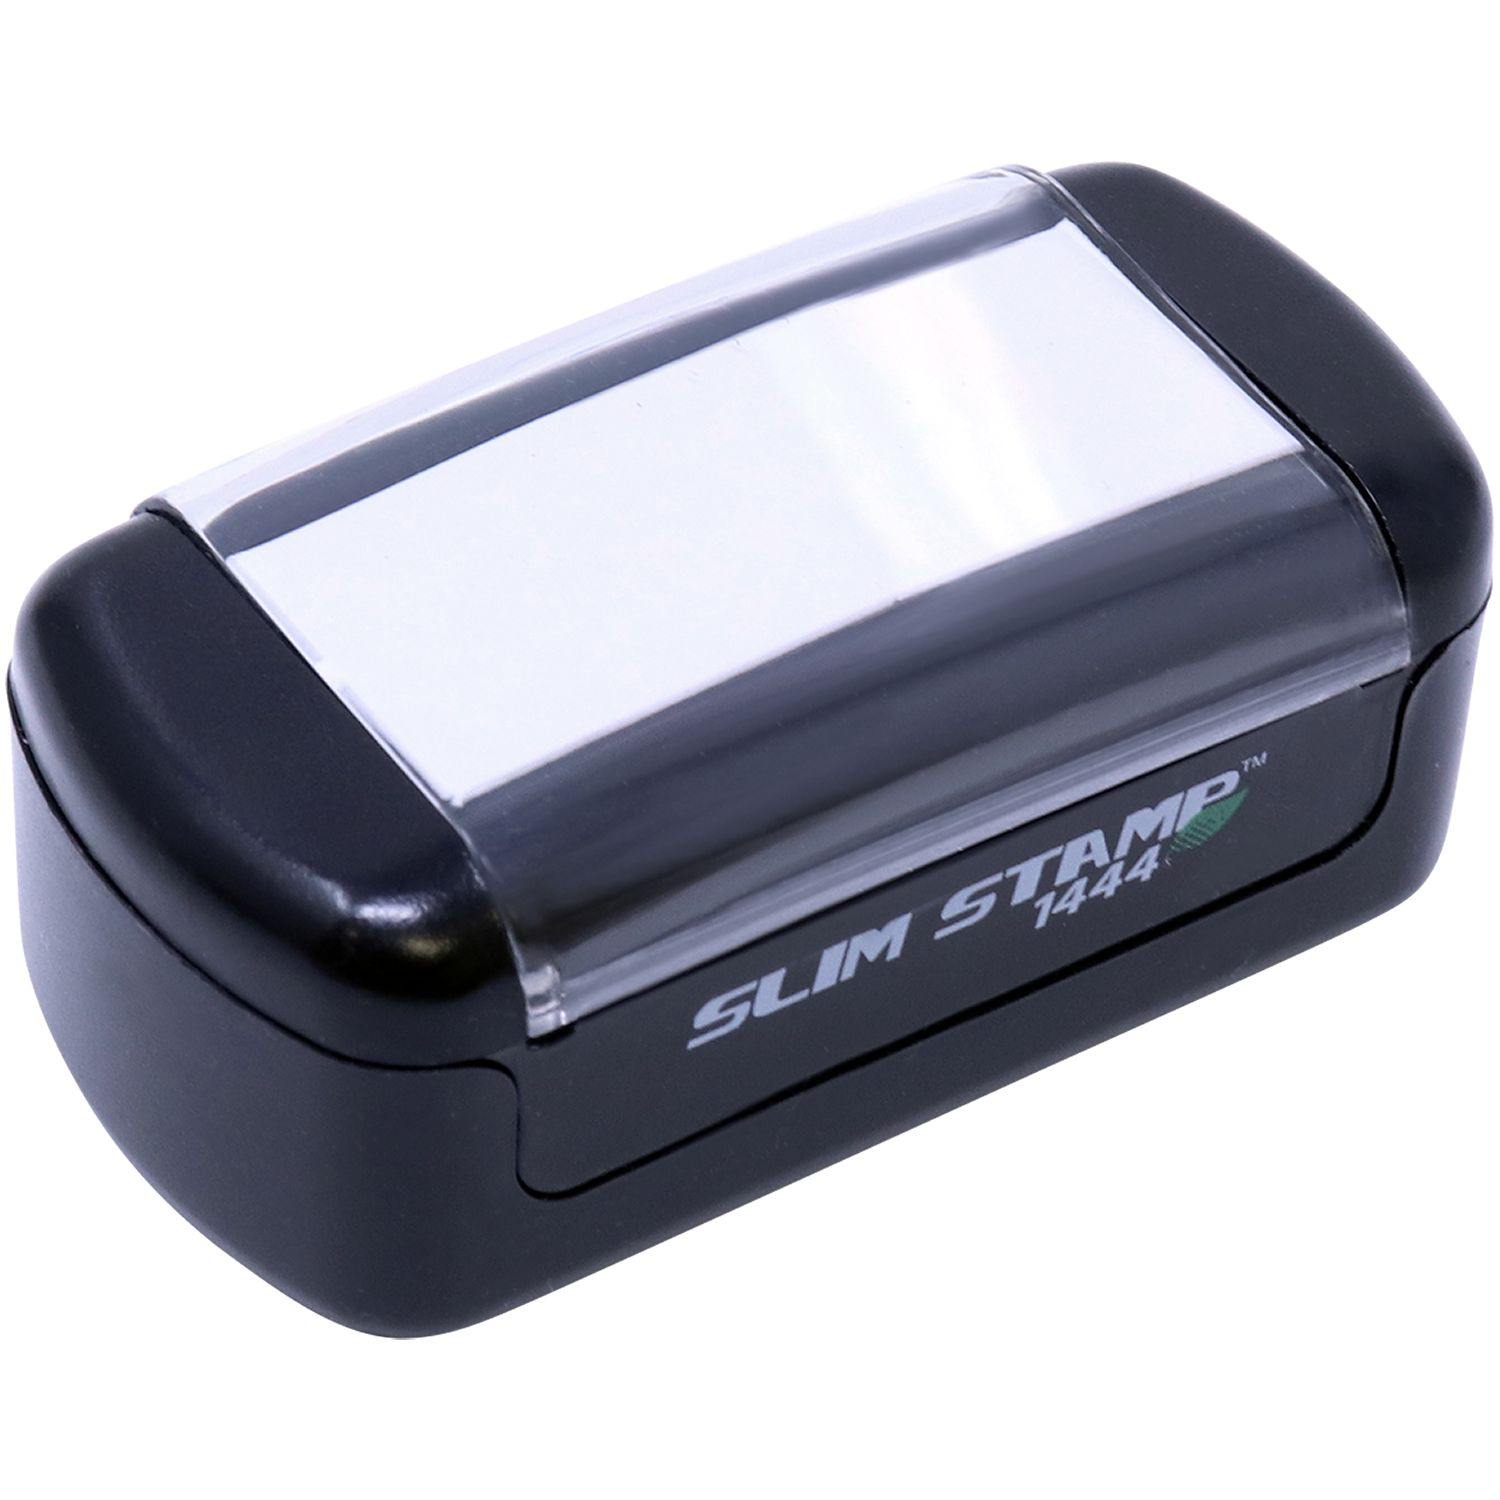 Slim Pre-Inked Certificada Stamp - Engineer Seal Stamps - Brand_Slim, Impression Size_Small, Stamp Type_Pre-Inked Stamp, Type of Use_Office, Type of Use_Postal & Mailing